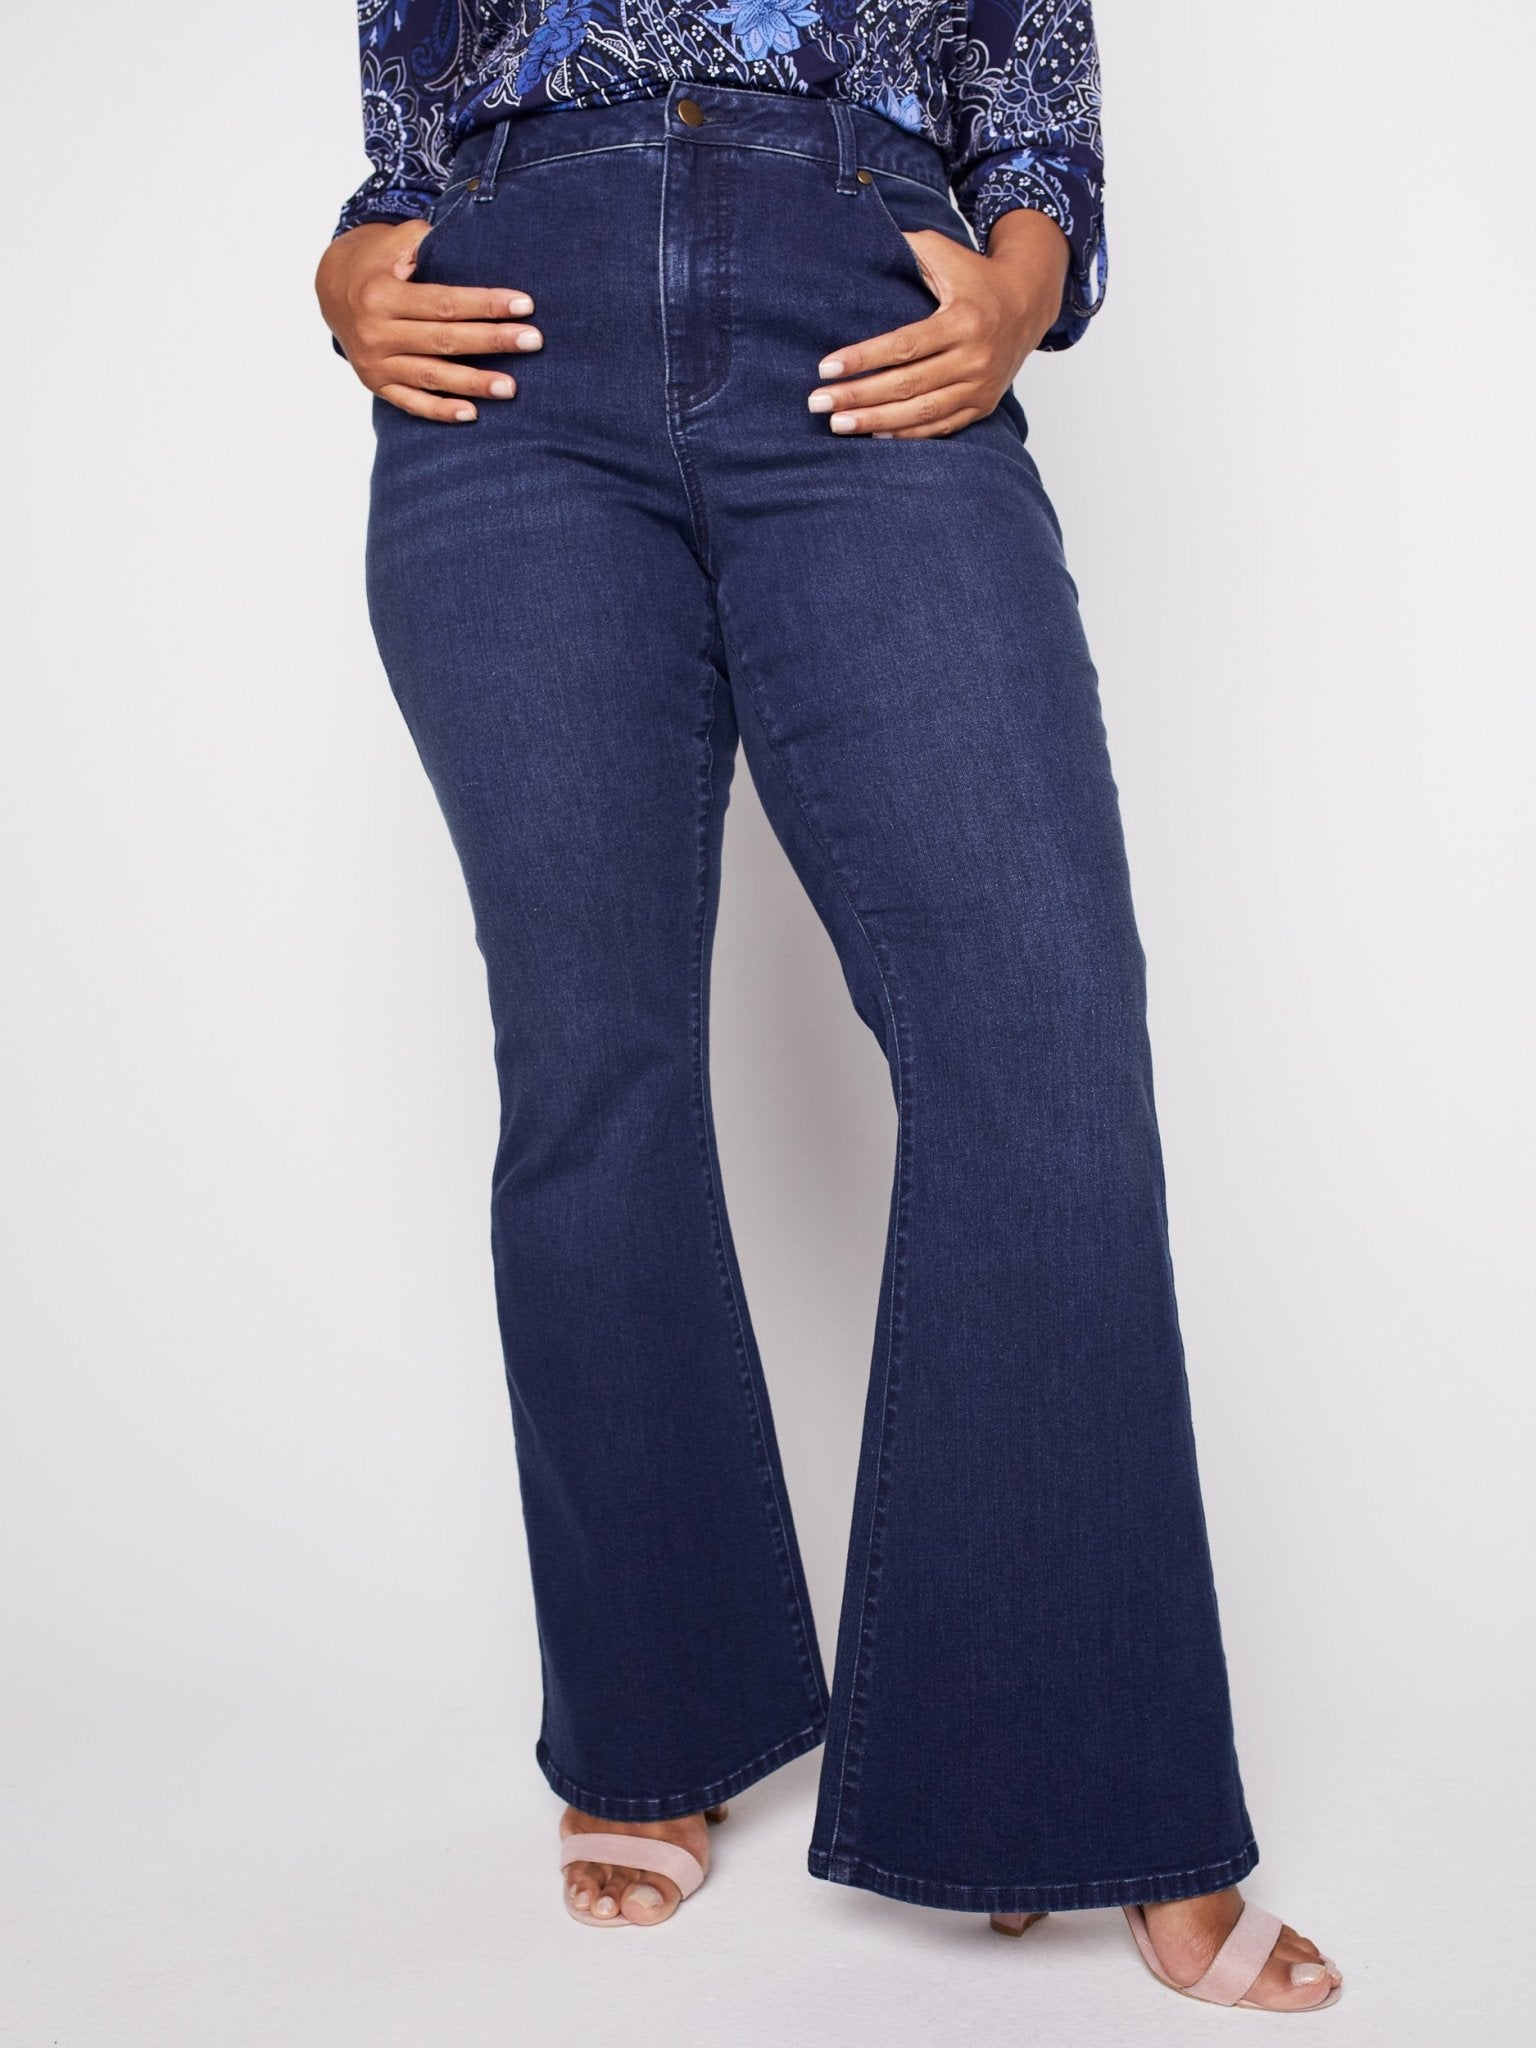 Gibobby Gibobby Pantalones Jean Mujer Juniors Jeans altos